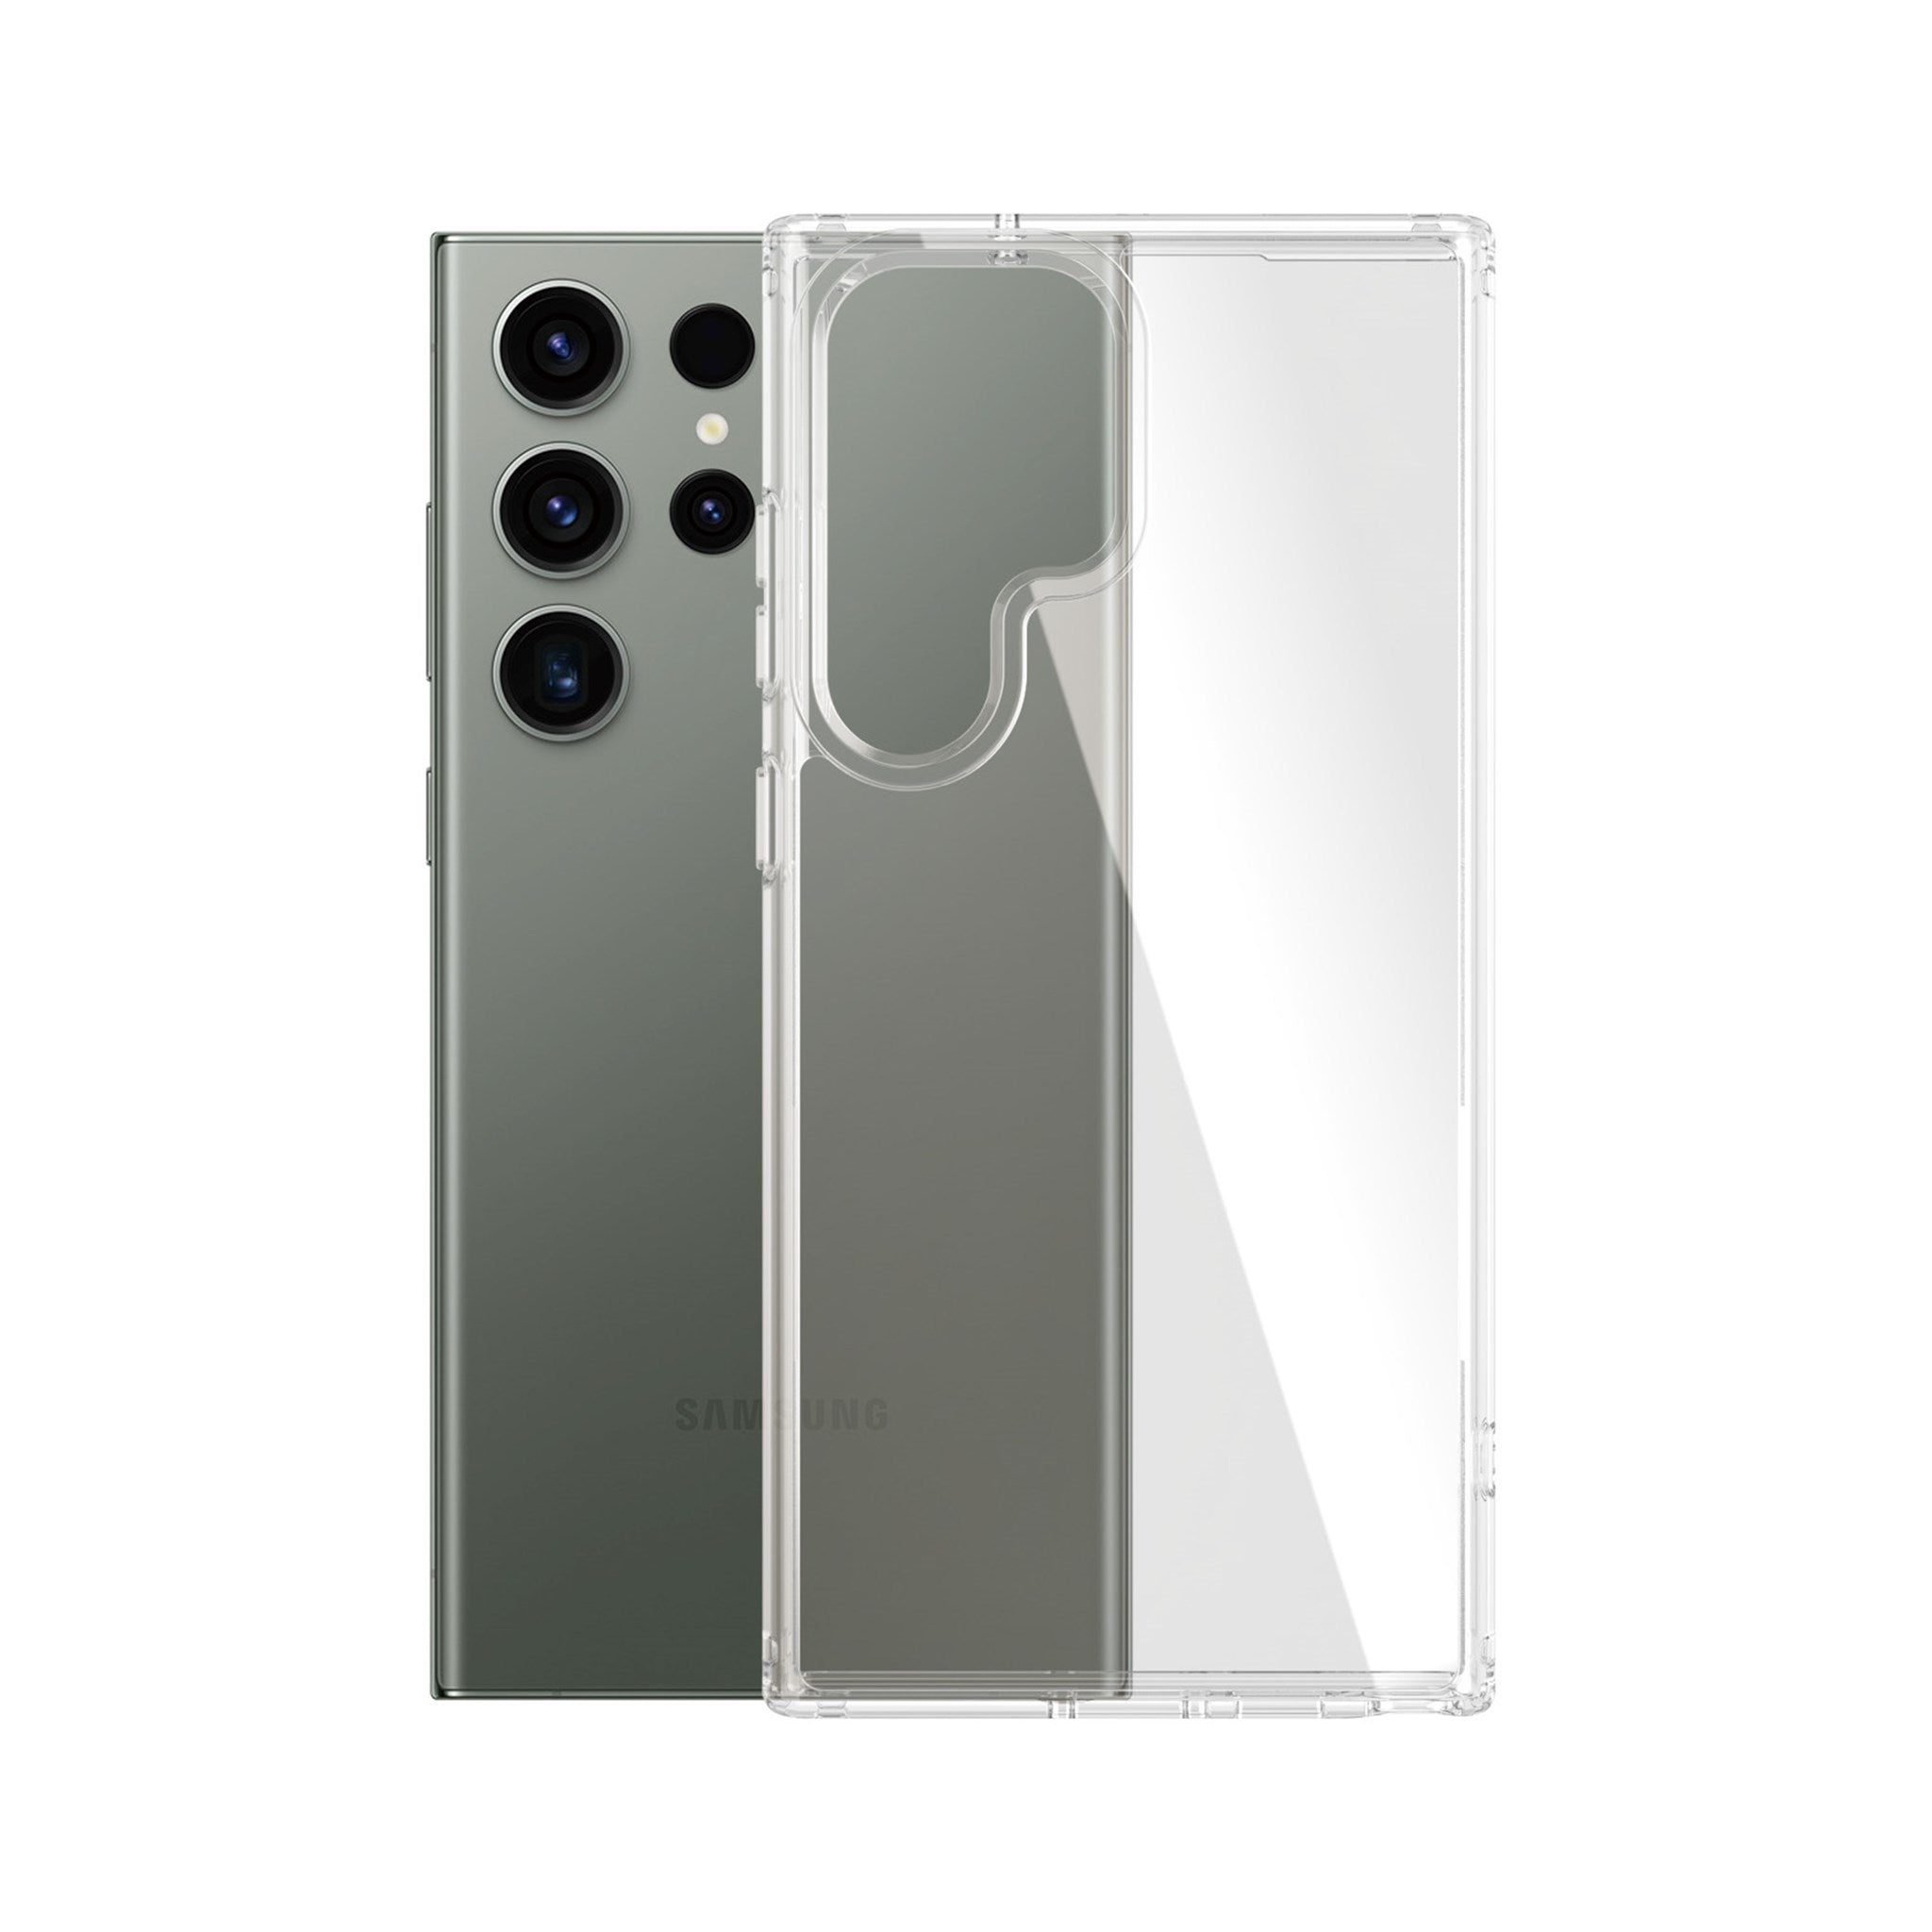 Ultra, Galaxy S23 Samsung, PANZERGLASS Backcover, Transparent, Transparent